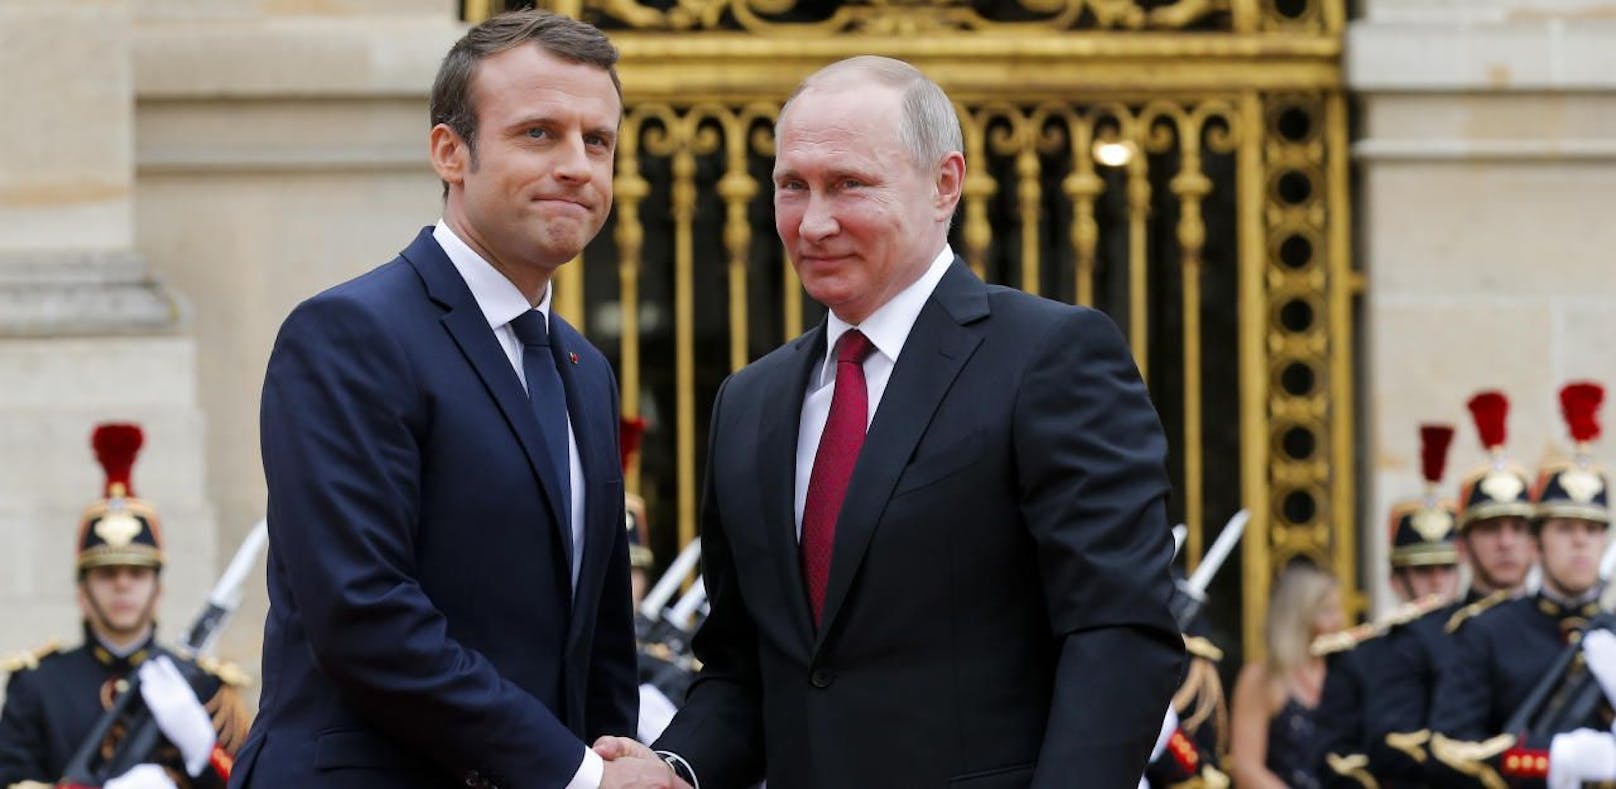 Frankreichs Präsident Emmanuel Macron (links) trifft seinen russischen Amtskollegen Wladimir Putin im Schloss Versailles nahe Paris.